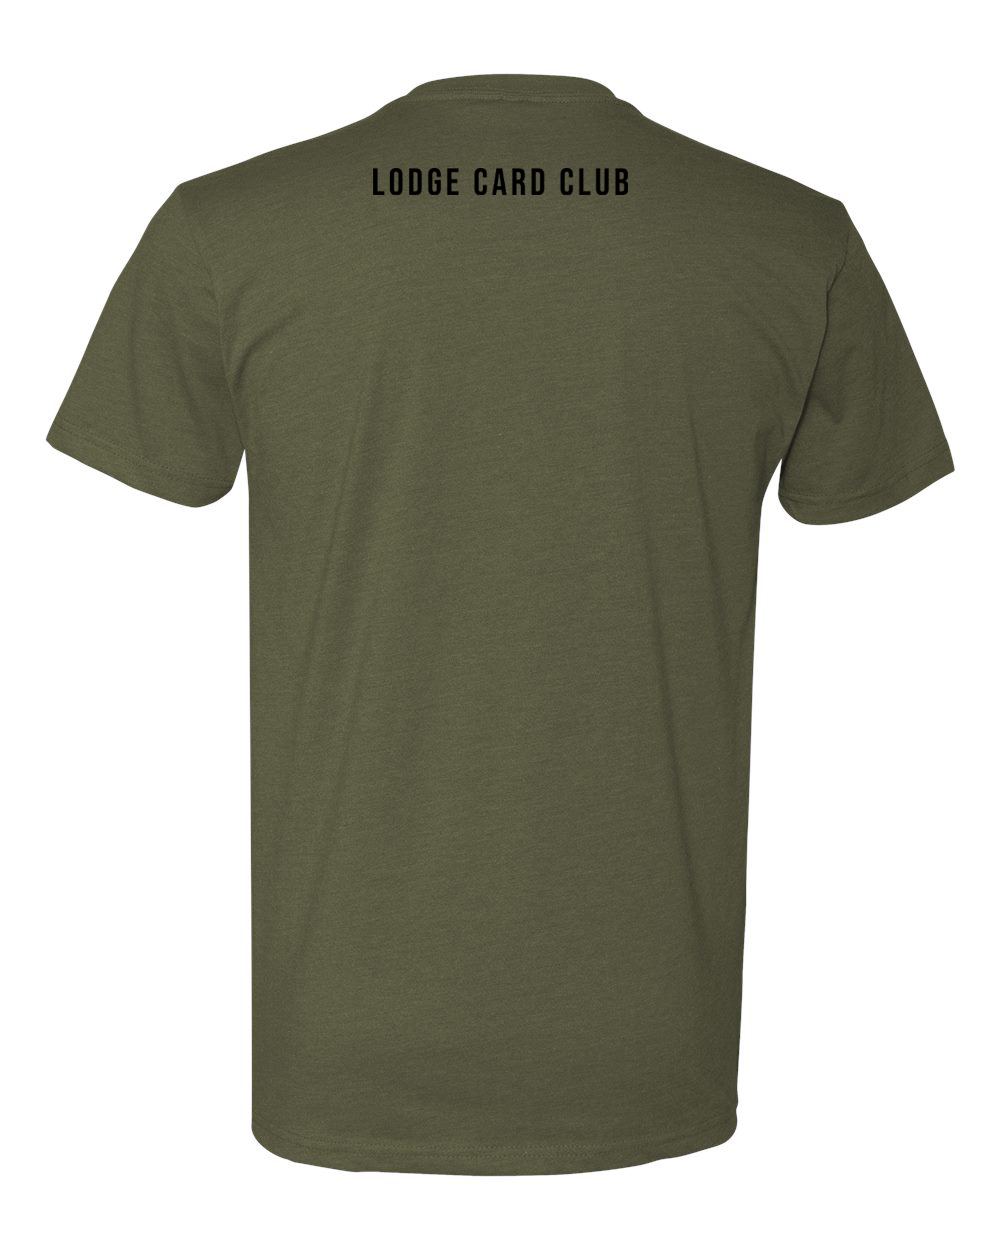 LCC Spade Shirt - Military